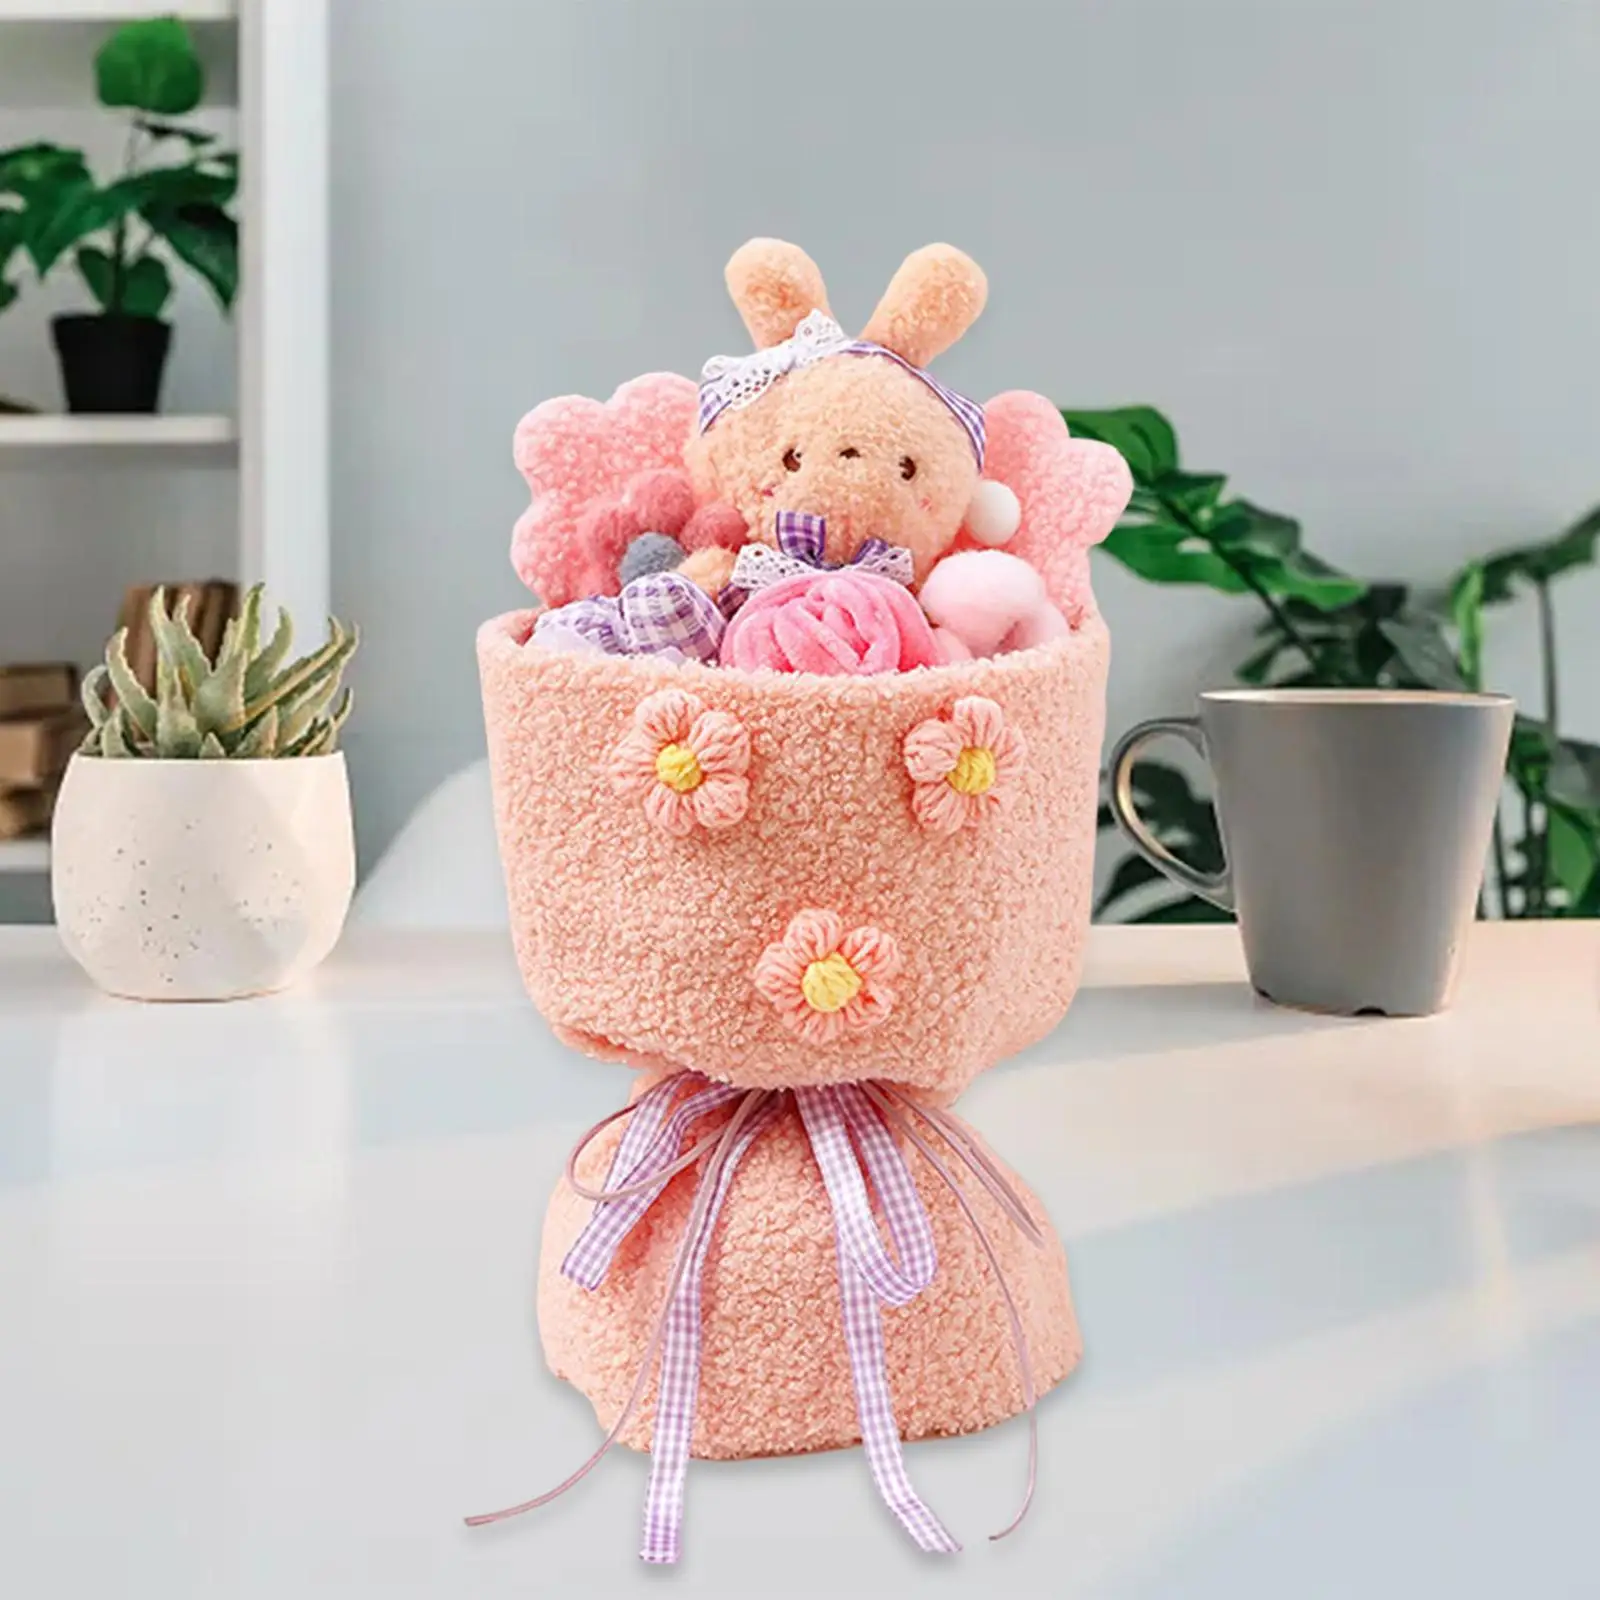 Stuffed Animal Doll Anniversaries Celebrations Gift Cute Plush